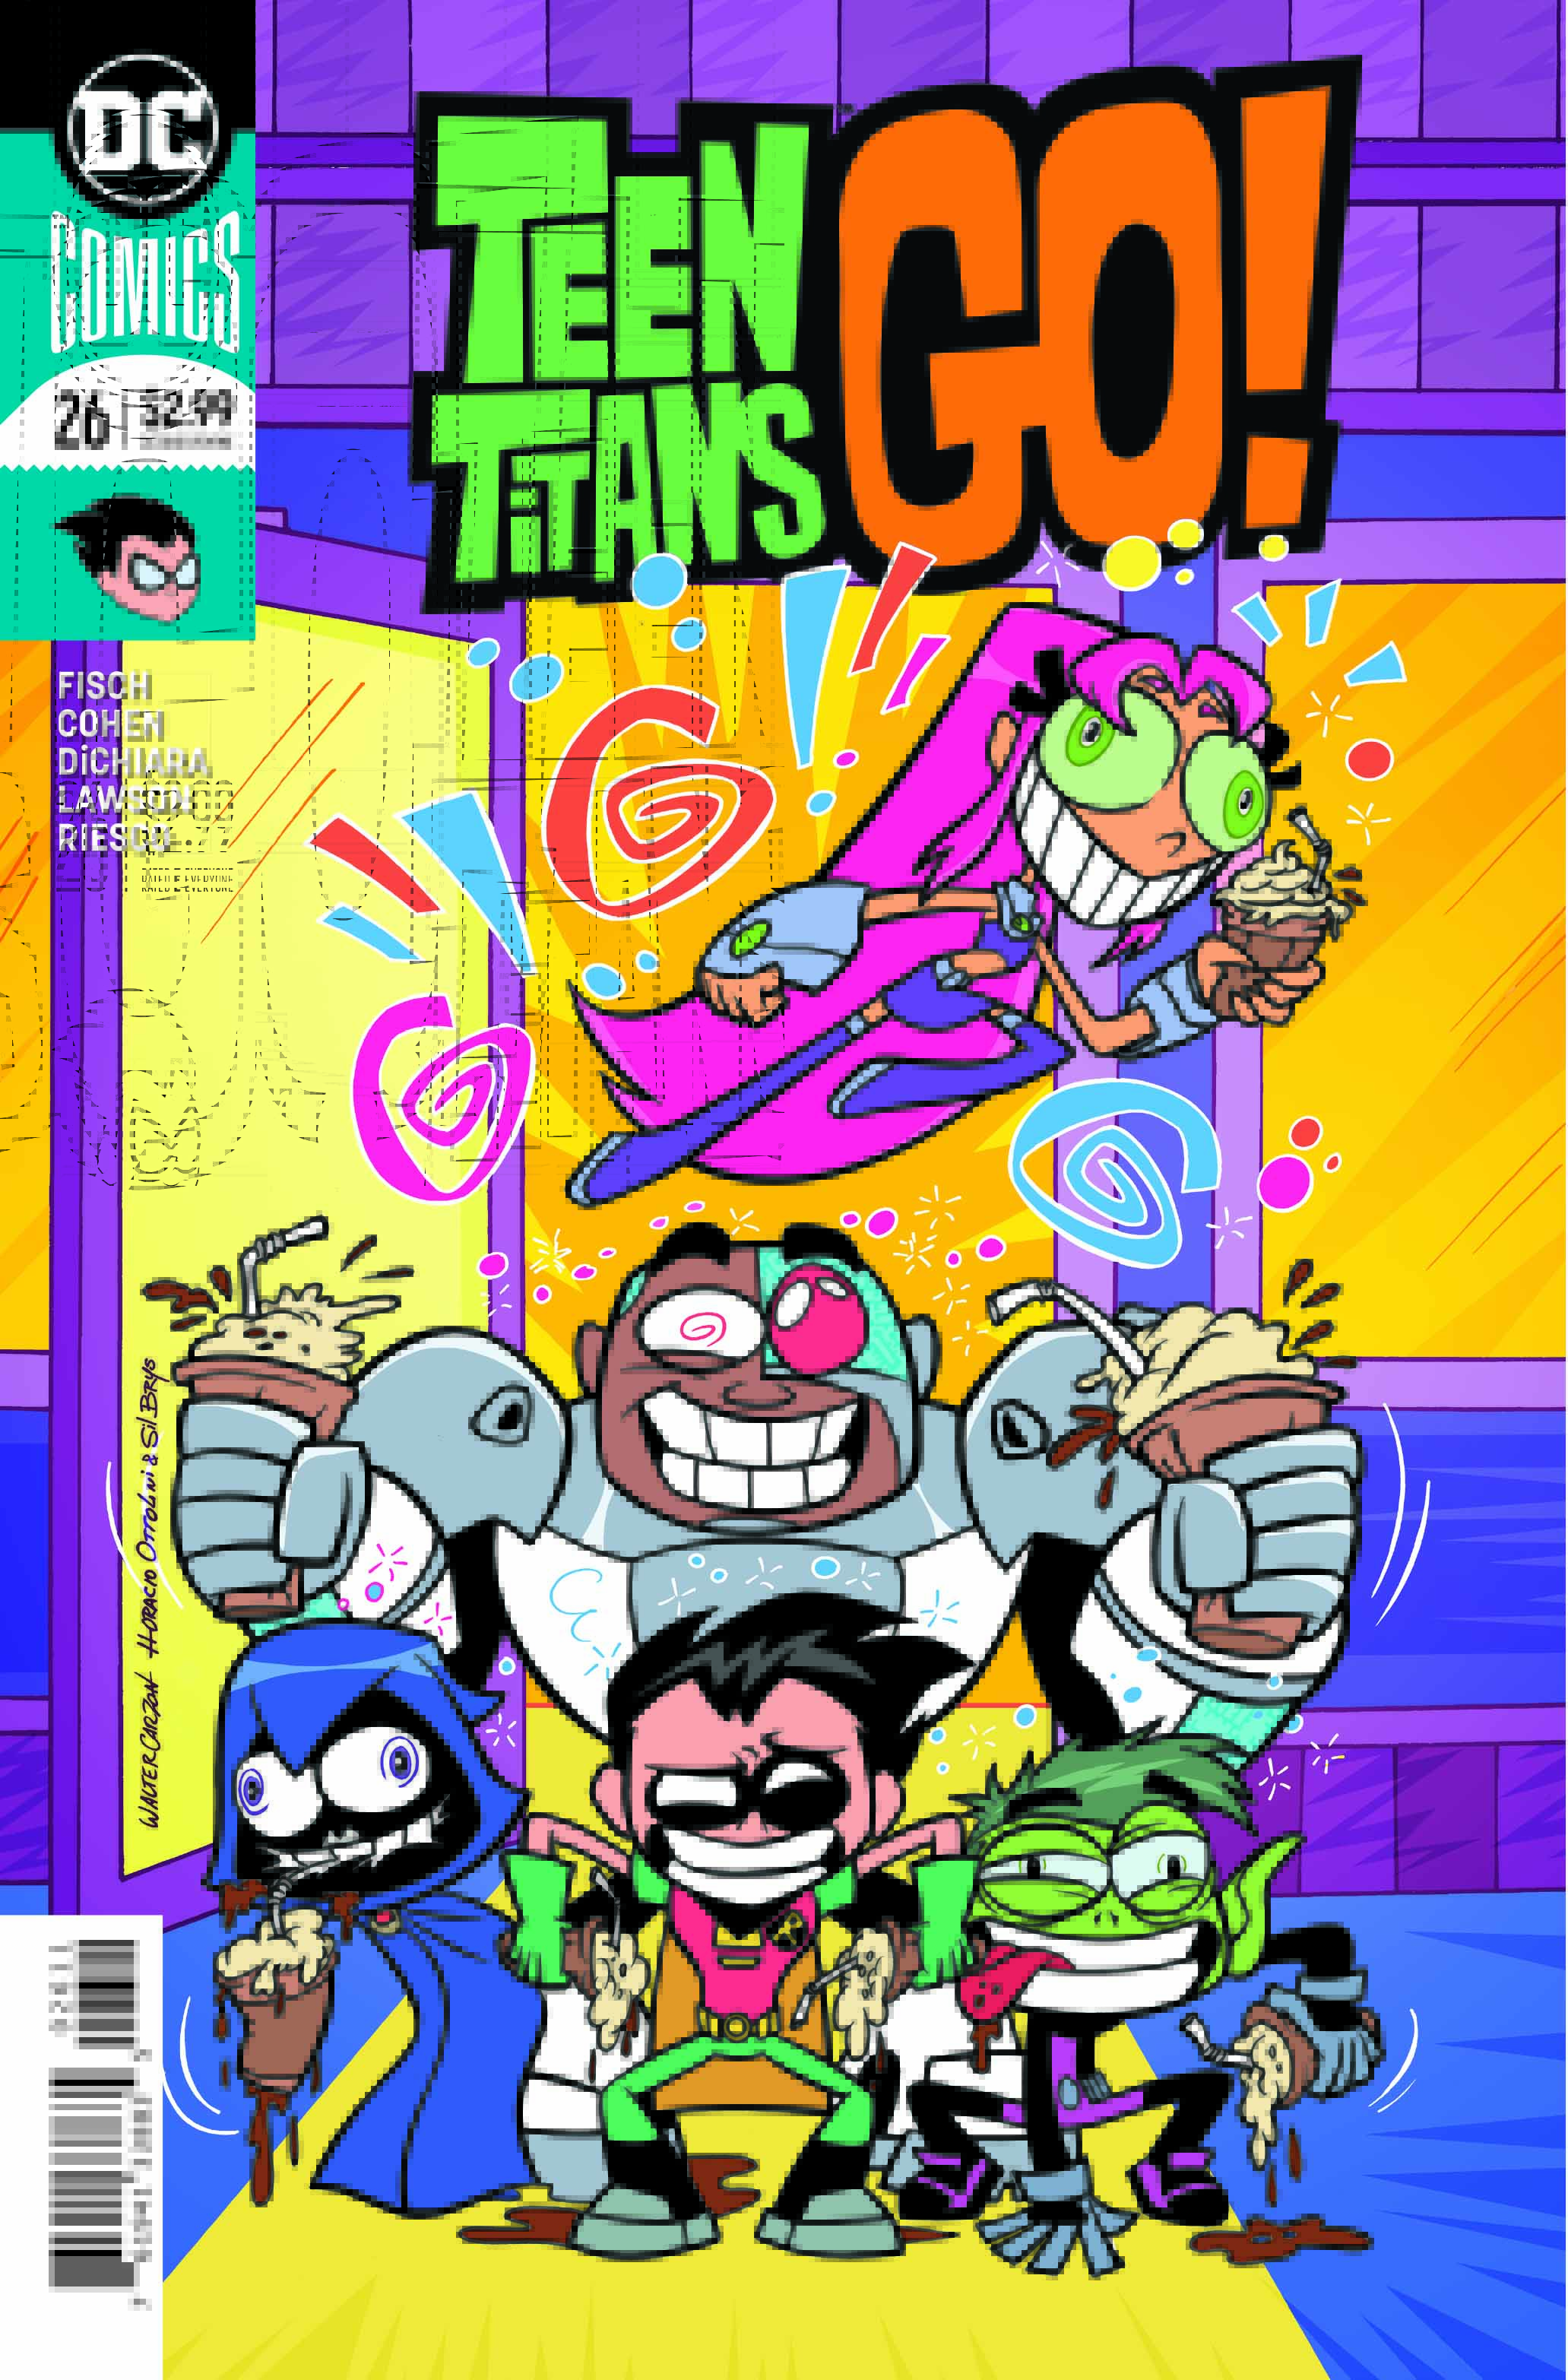 Teen Titans Go! #5 review